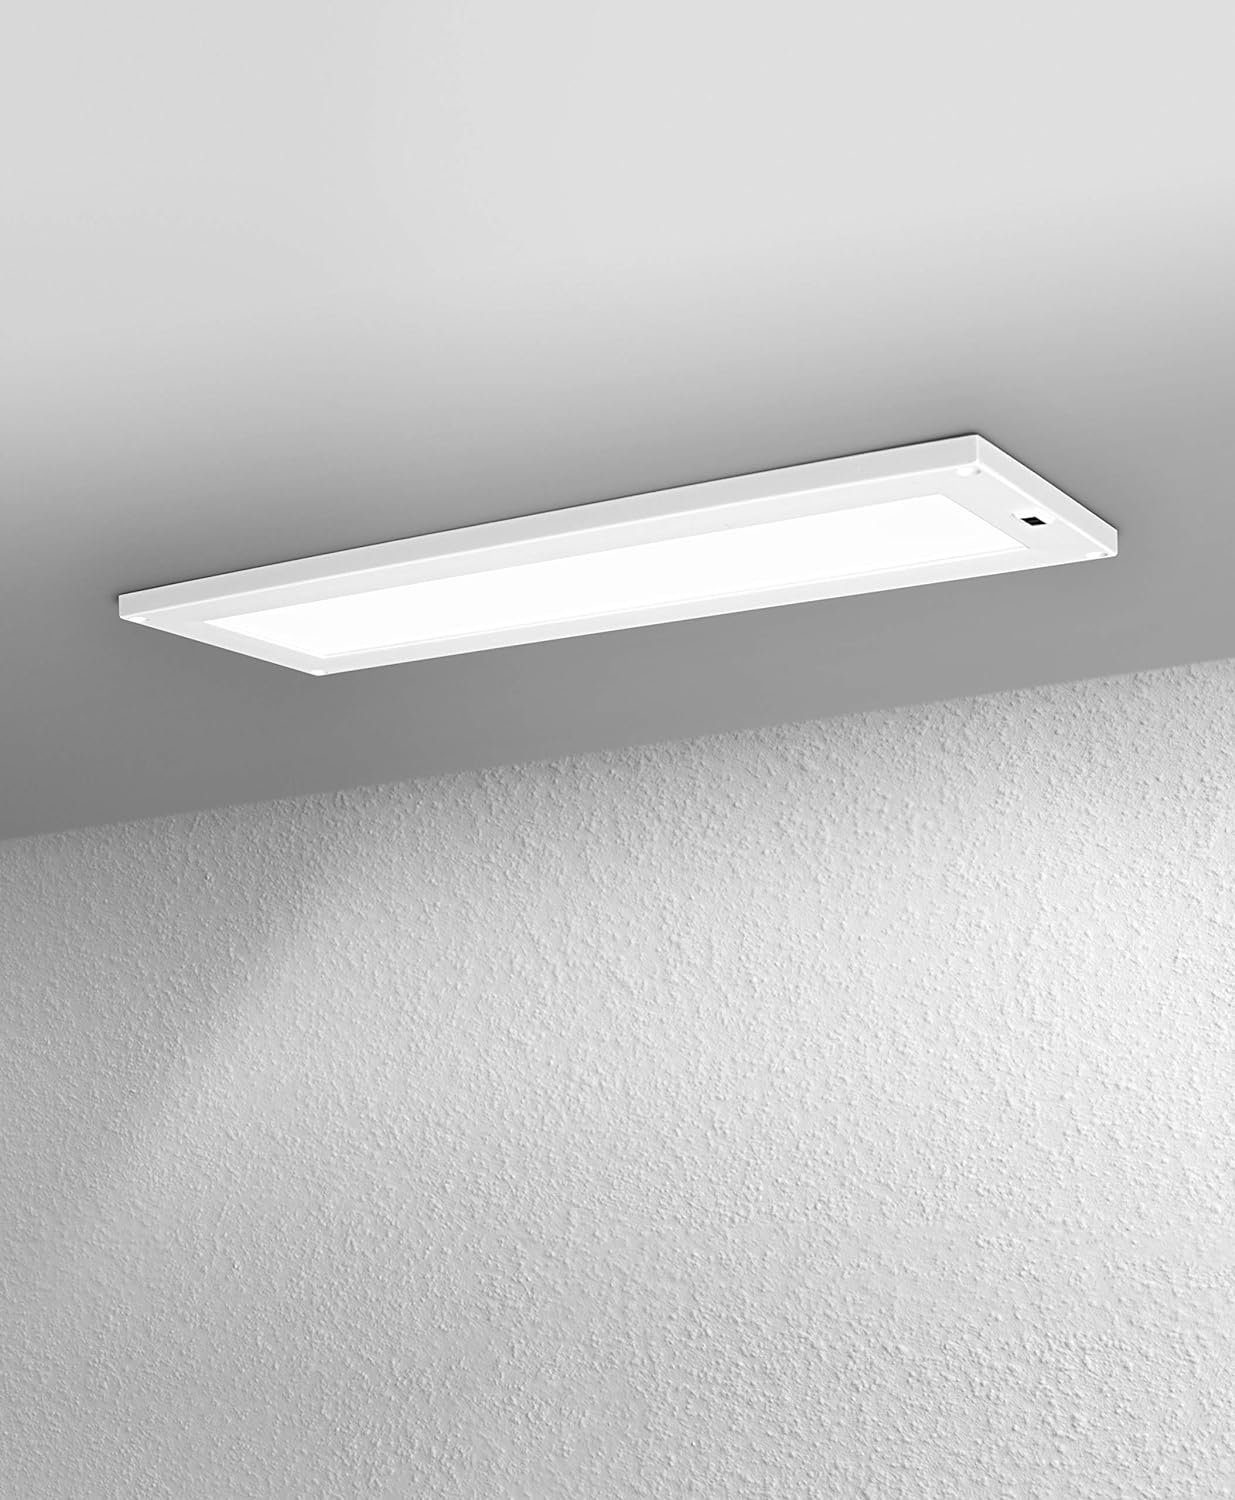 LED Lampe LED 30cm Ledvance Unterbauleuchte Warmweiß, dimmbar Unterschrank Ledvance Sensor warmweiß, Unterbauleuchte